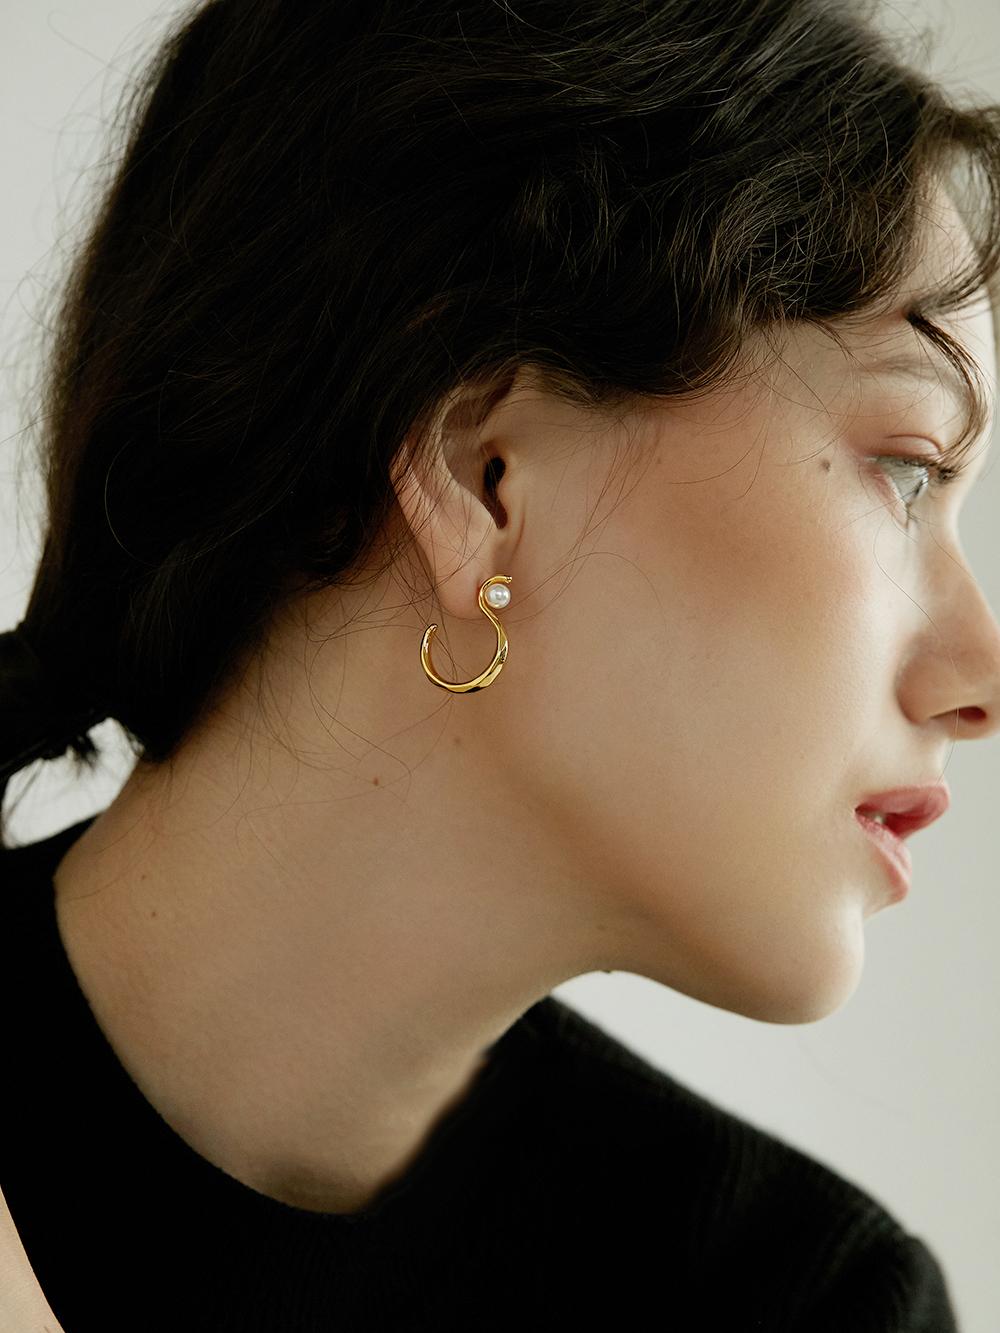 Gold Pearl Stud Earrings